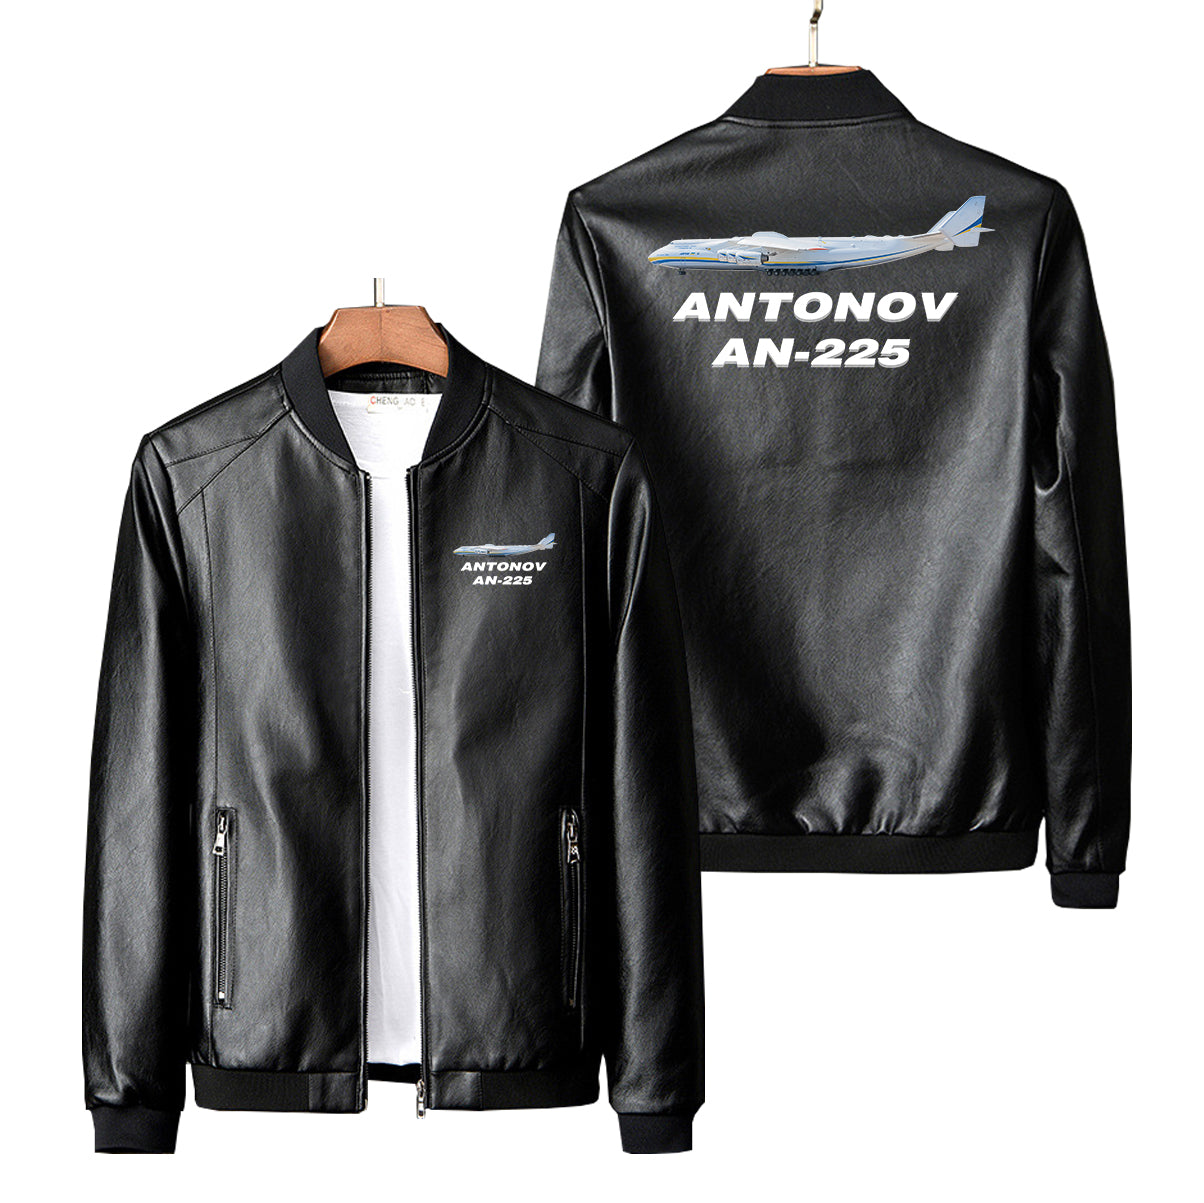 The Antonov AN-225 Designed PU Leather Jackets